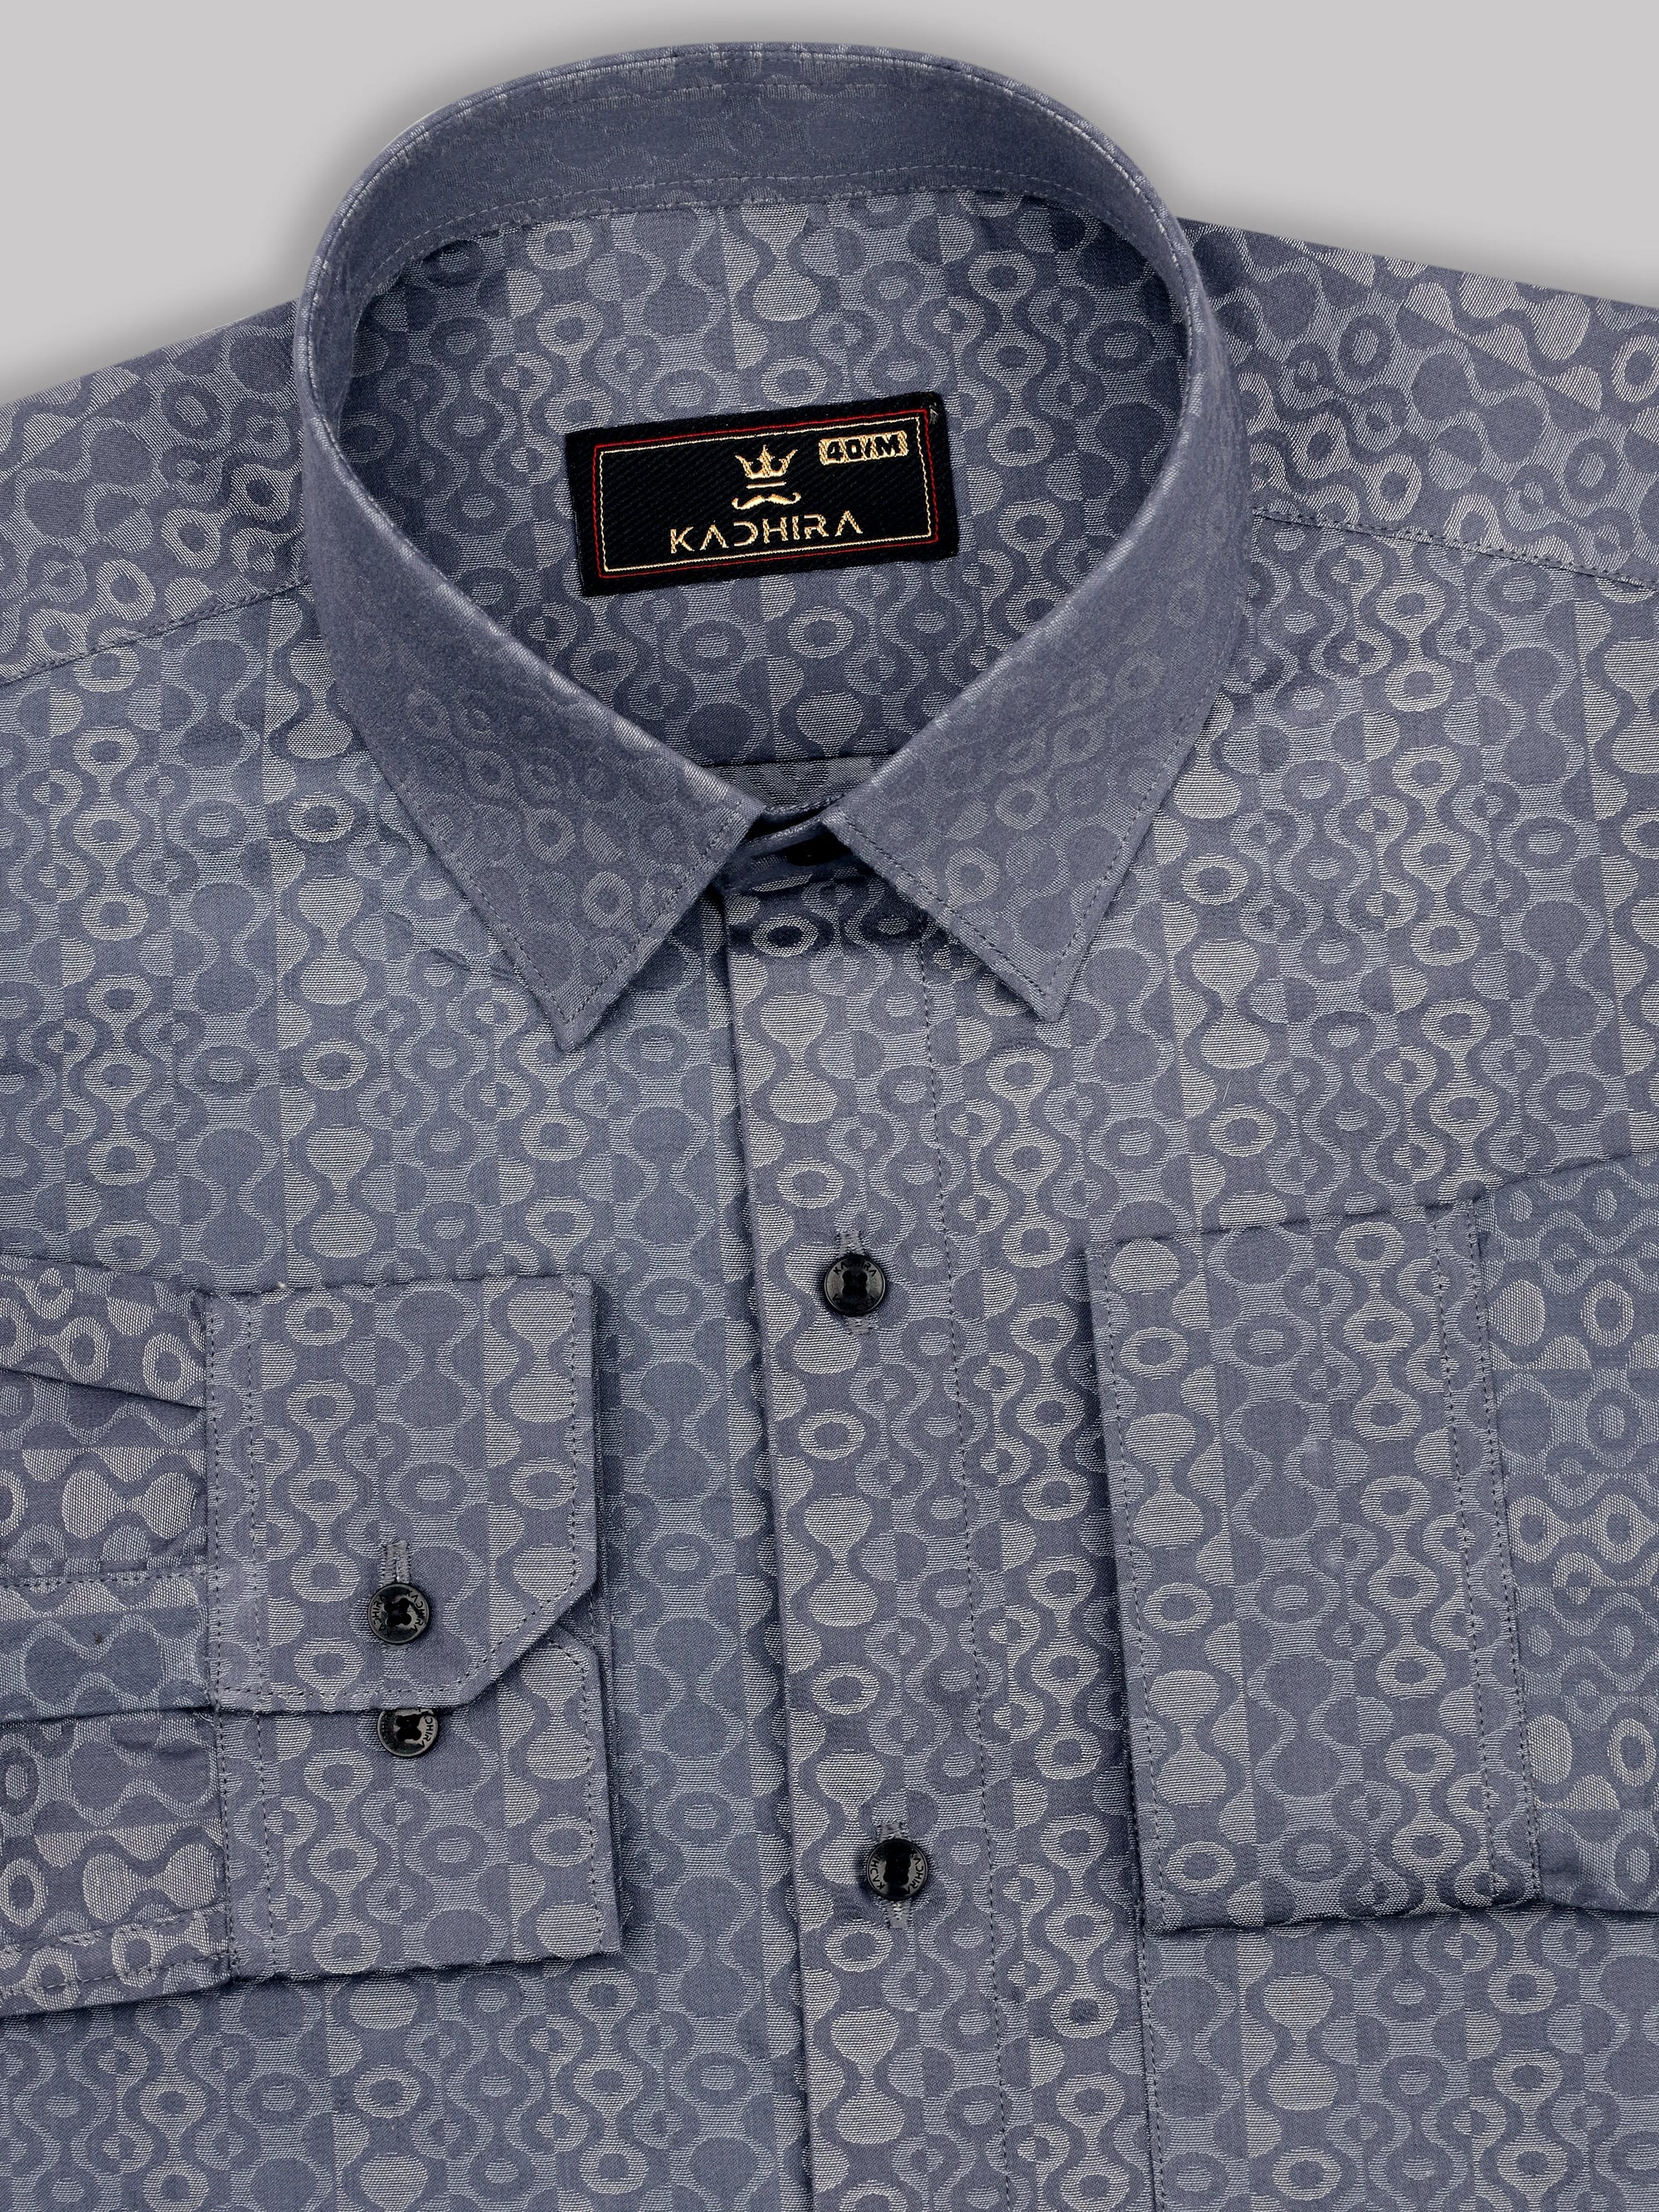 Slate Gray Seamless Jacquard Premium Cotton Shirt